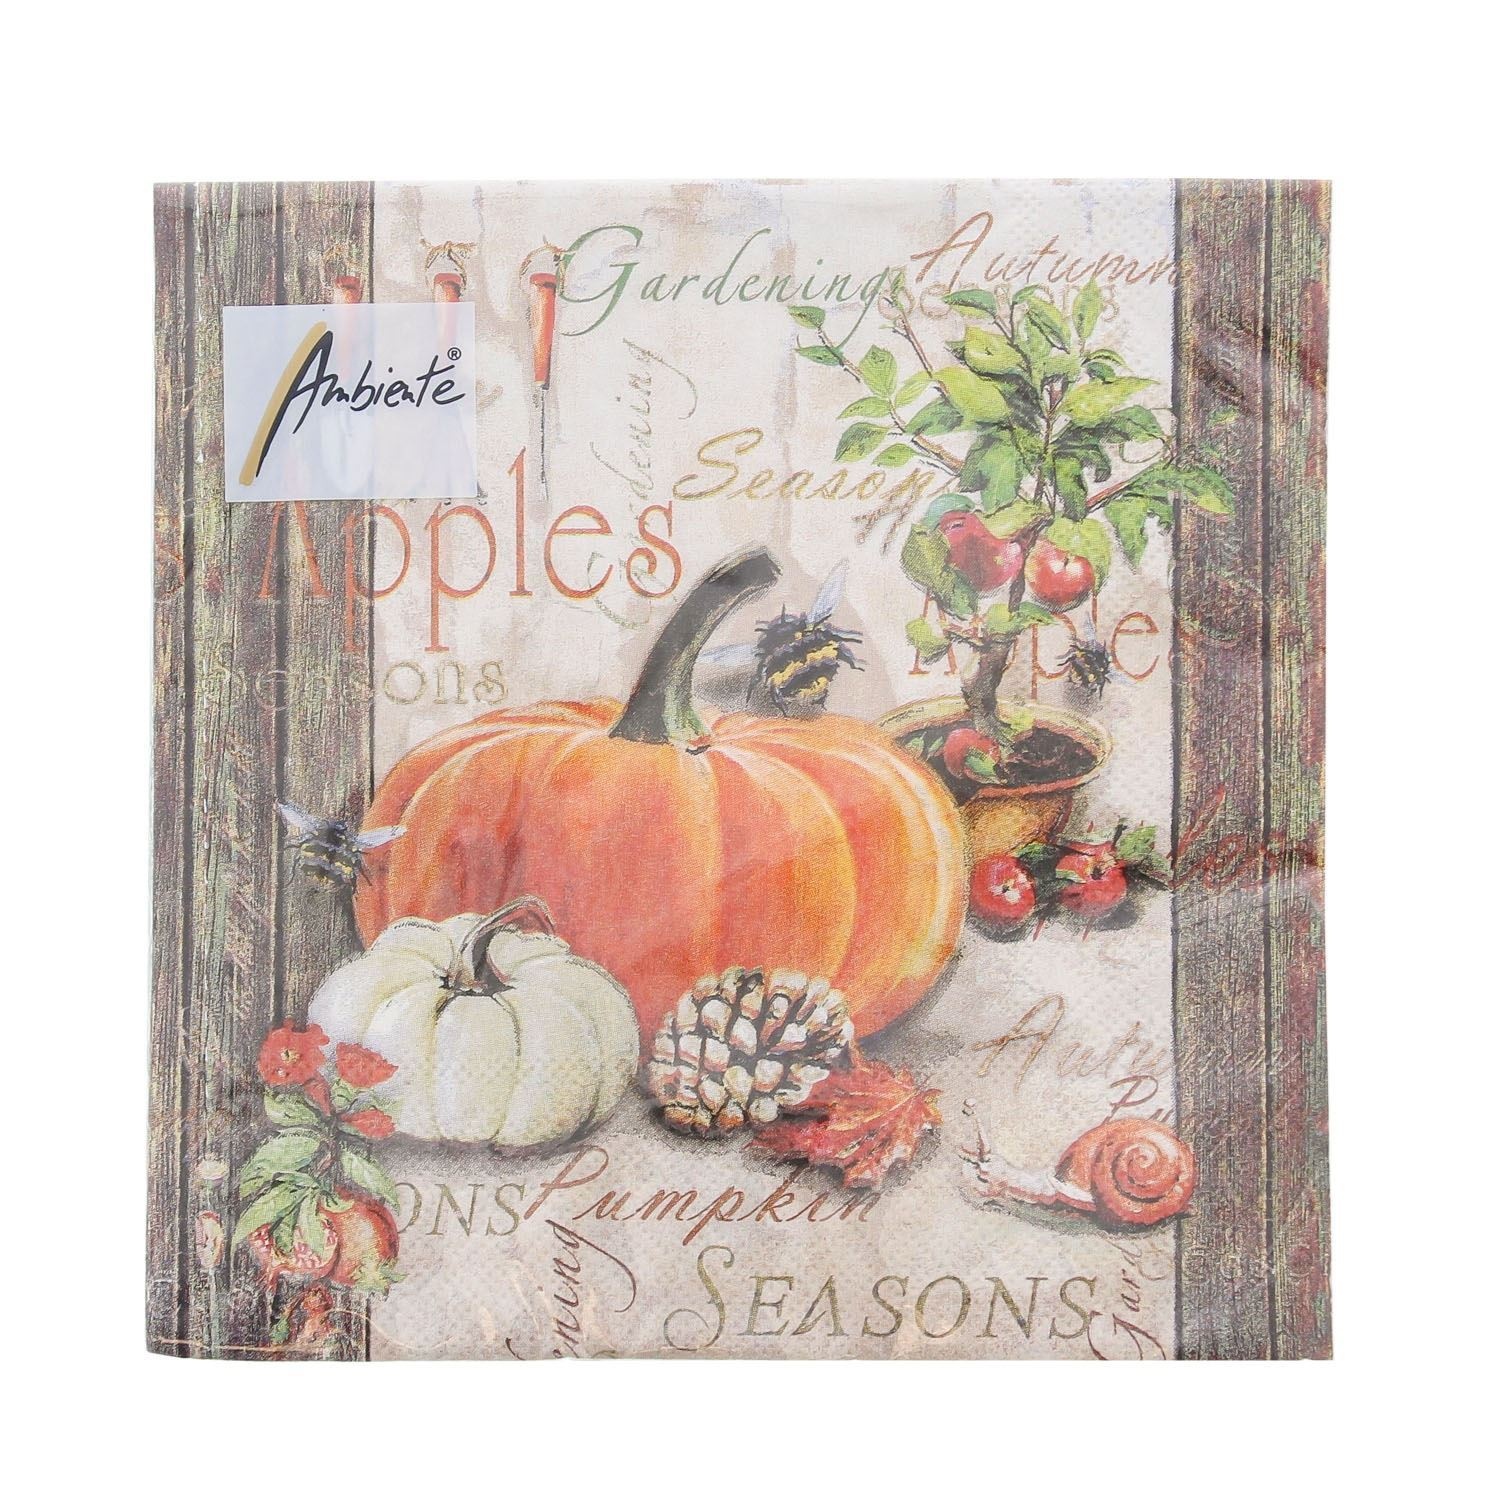 Napkin Autumn Gardening 33cm x 33cm - 065*165*25 mm - 1 pack of 20 napkins